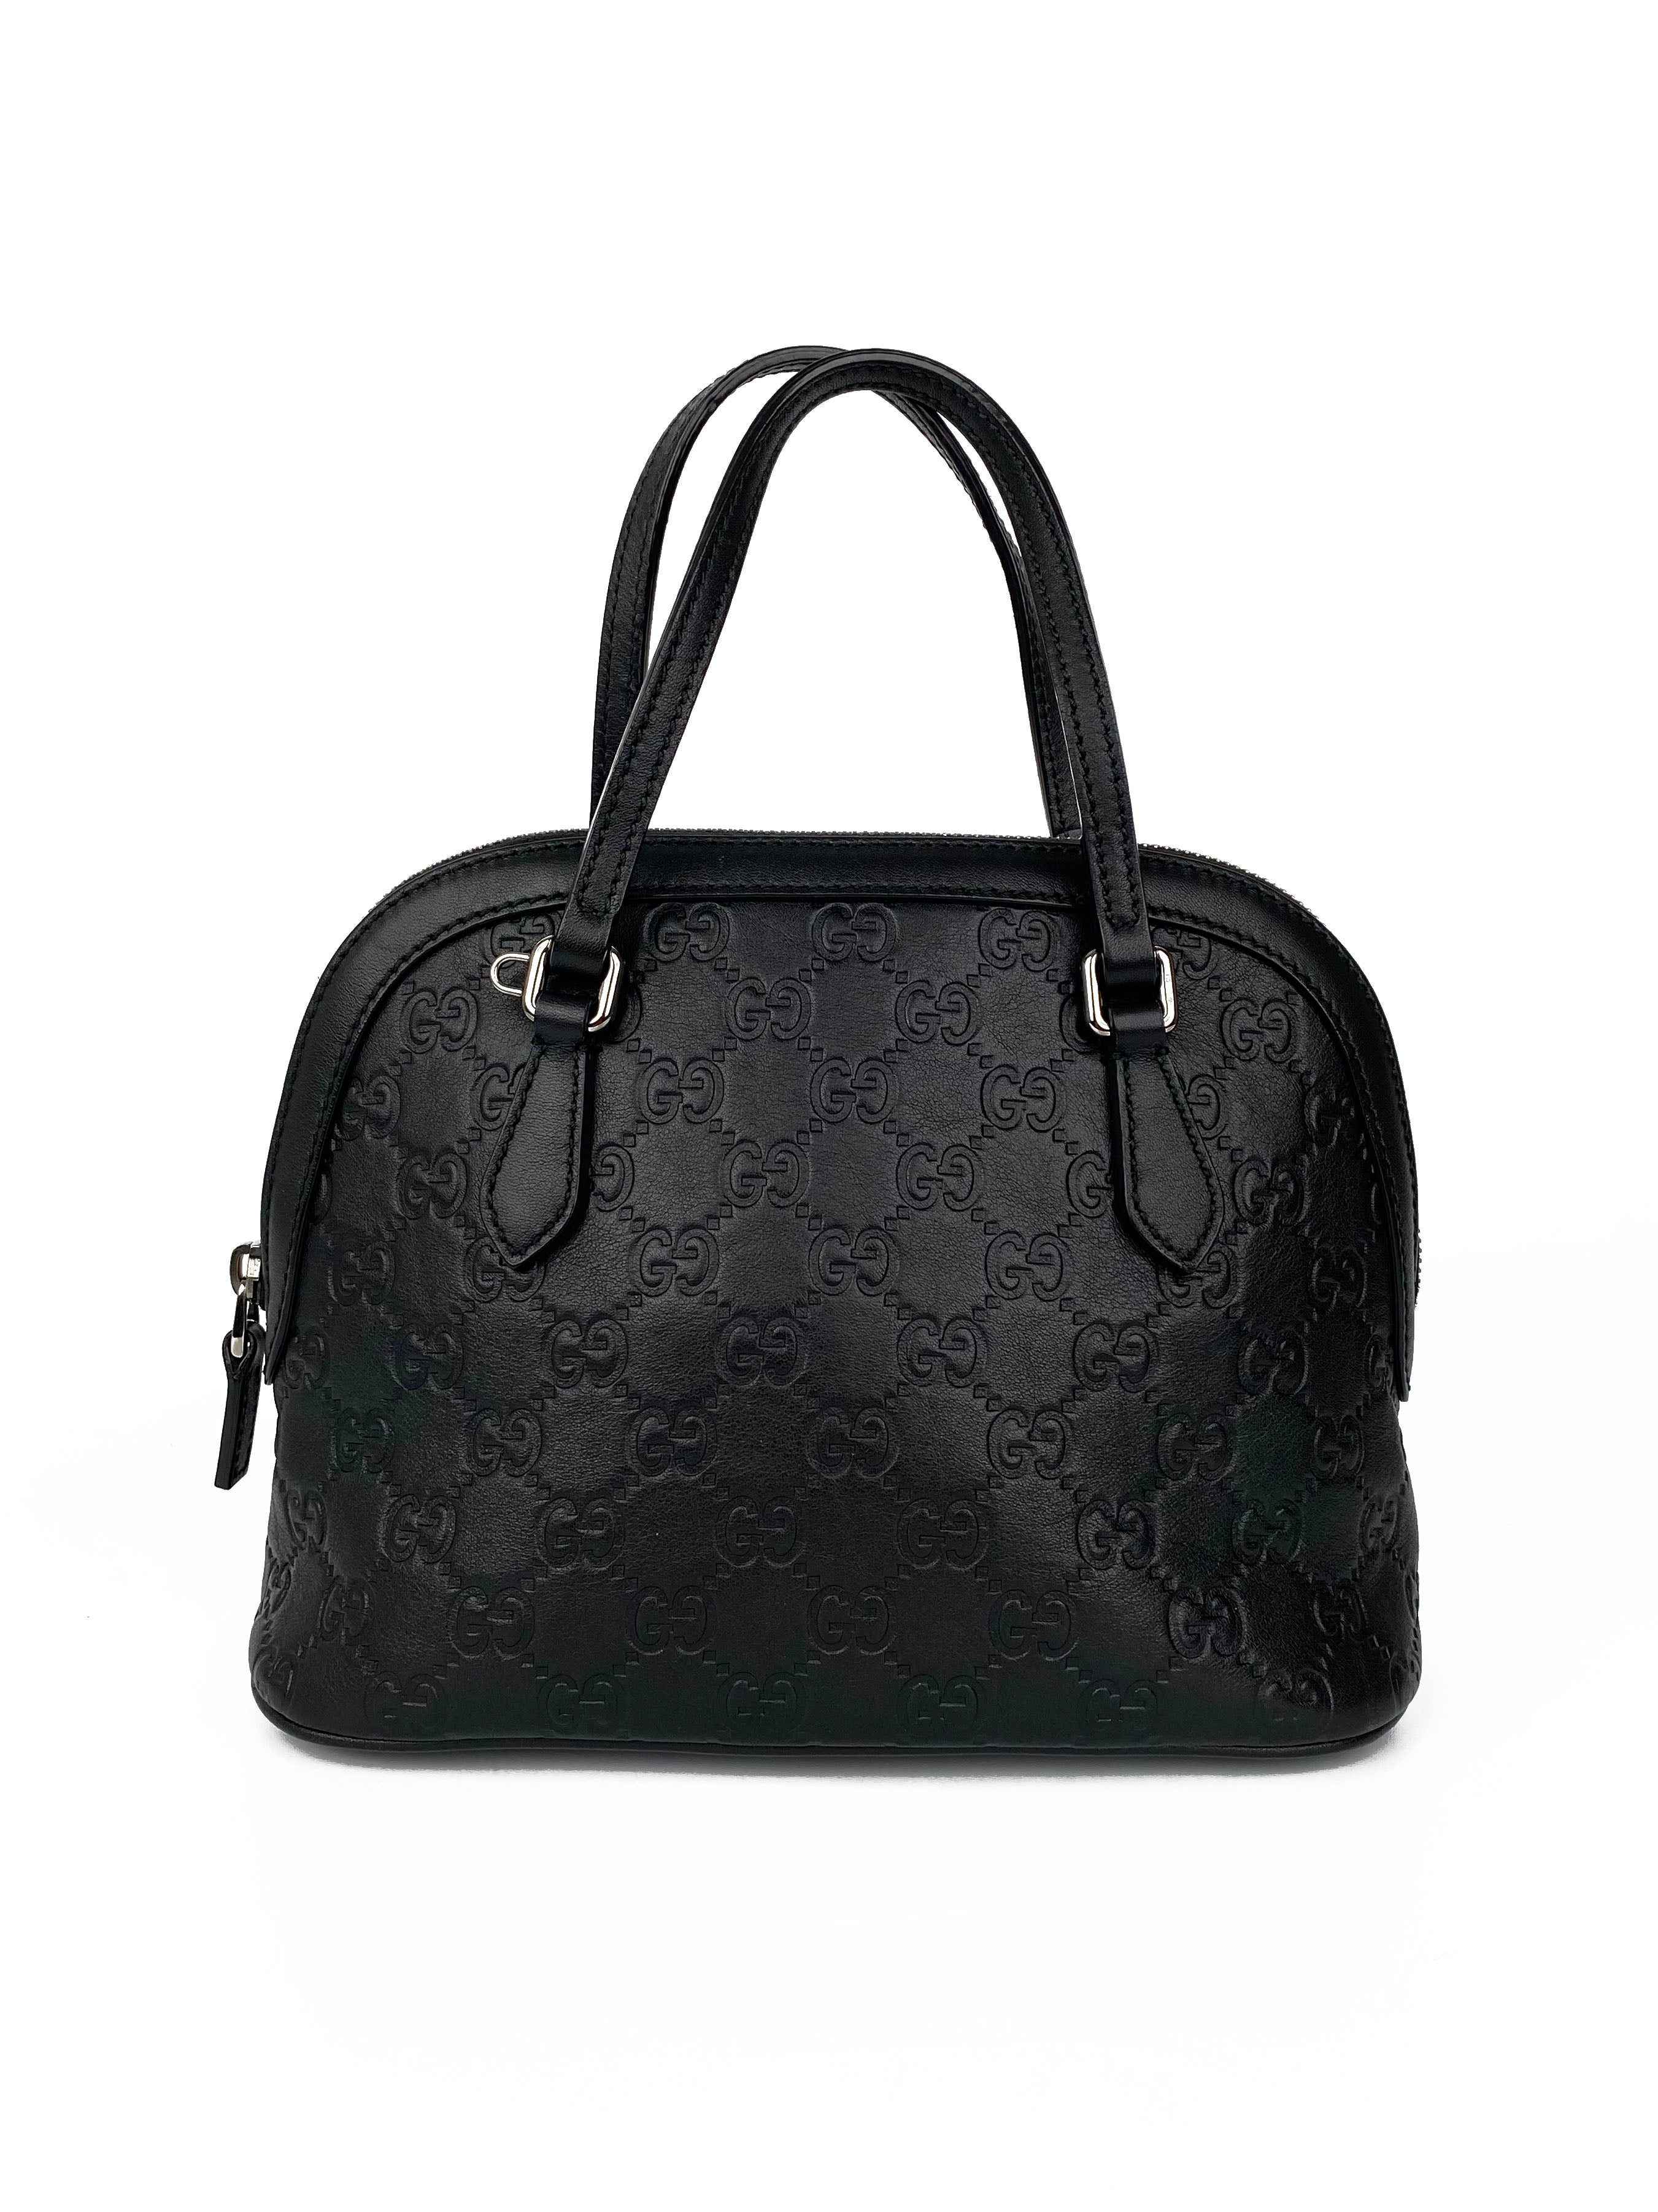 Gucci Small Black GG Shoulder Bag